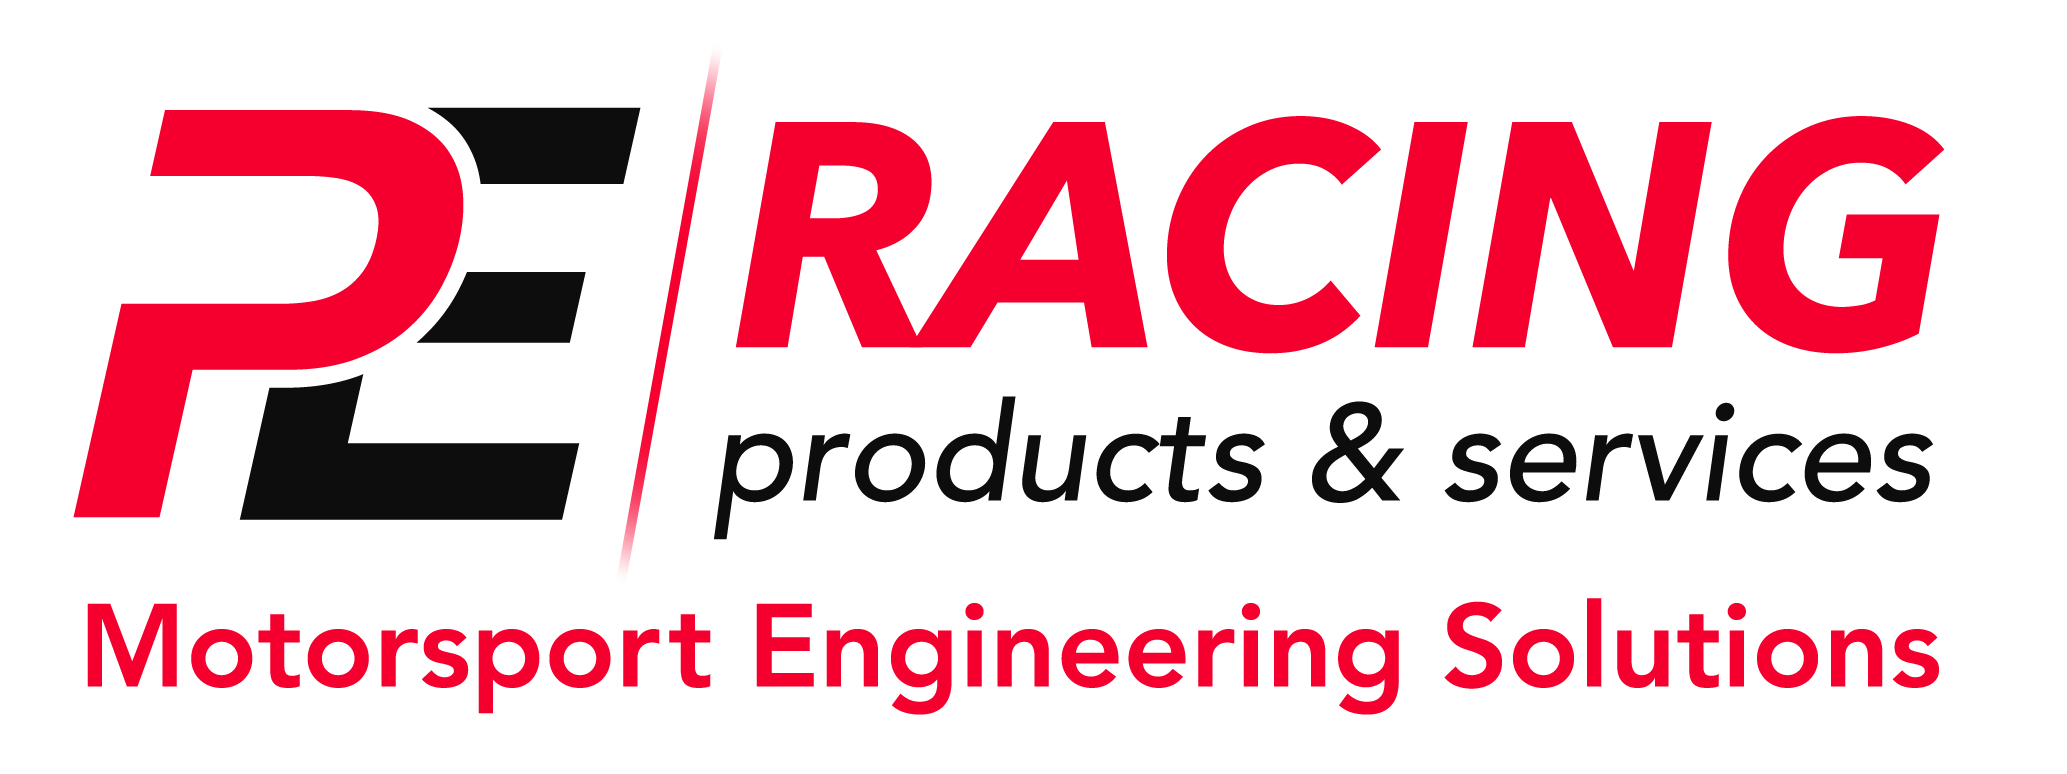 PR Racing Logo Tagline